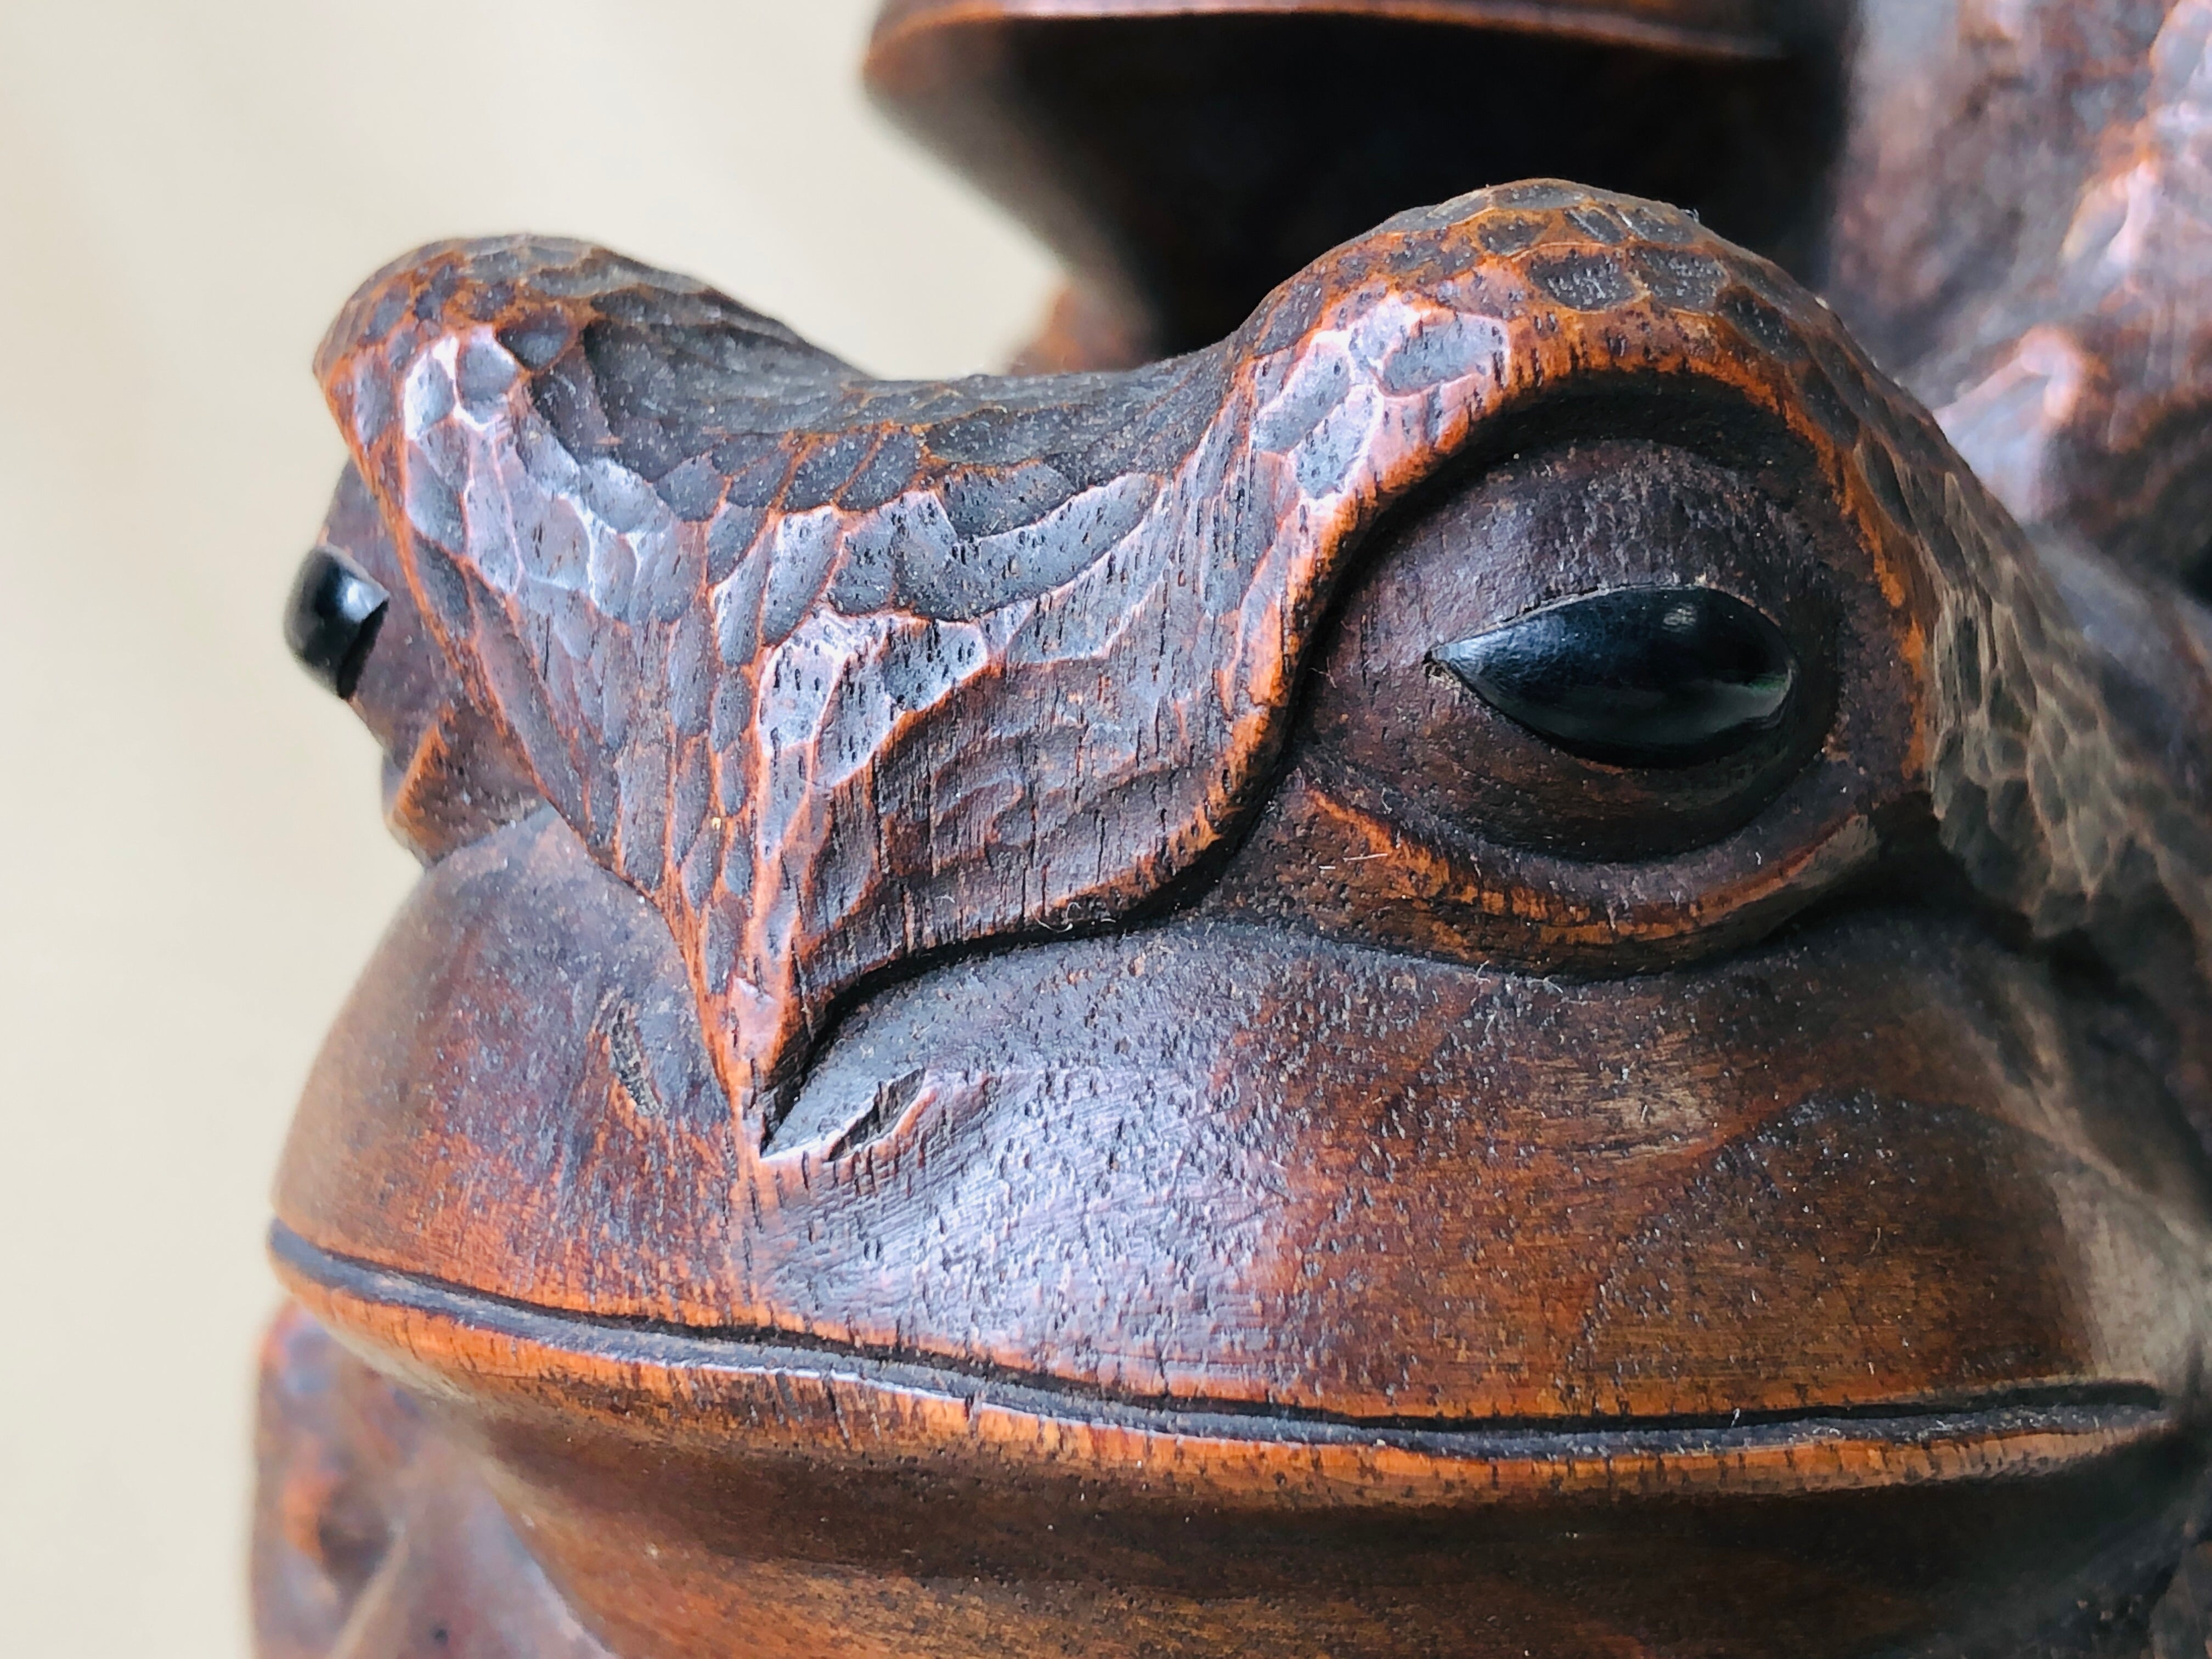 Y4254 OKIMONO wood carving Parent Child Frog figure signed Japan 